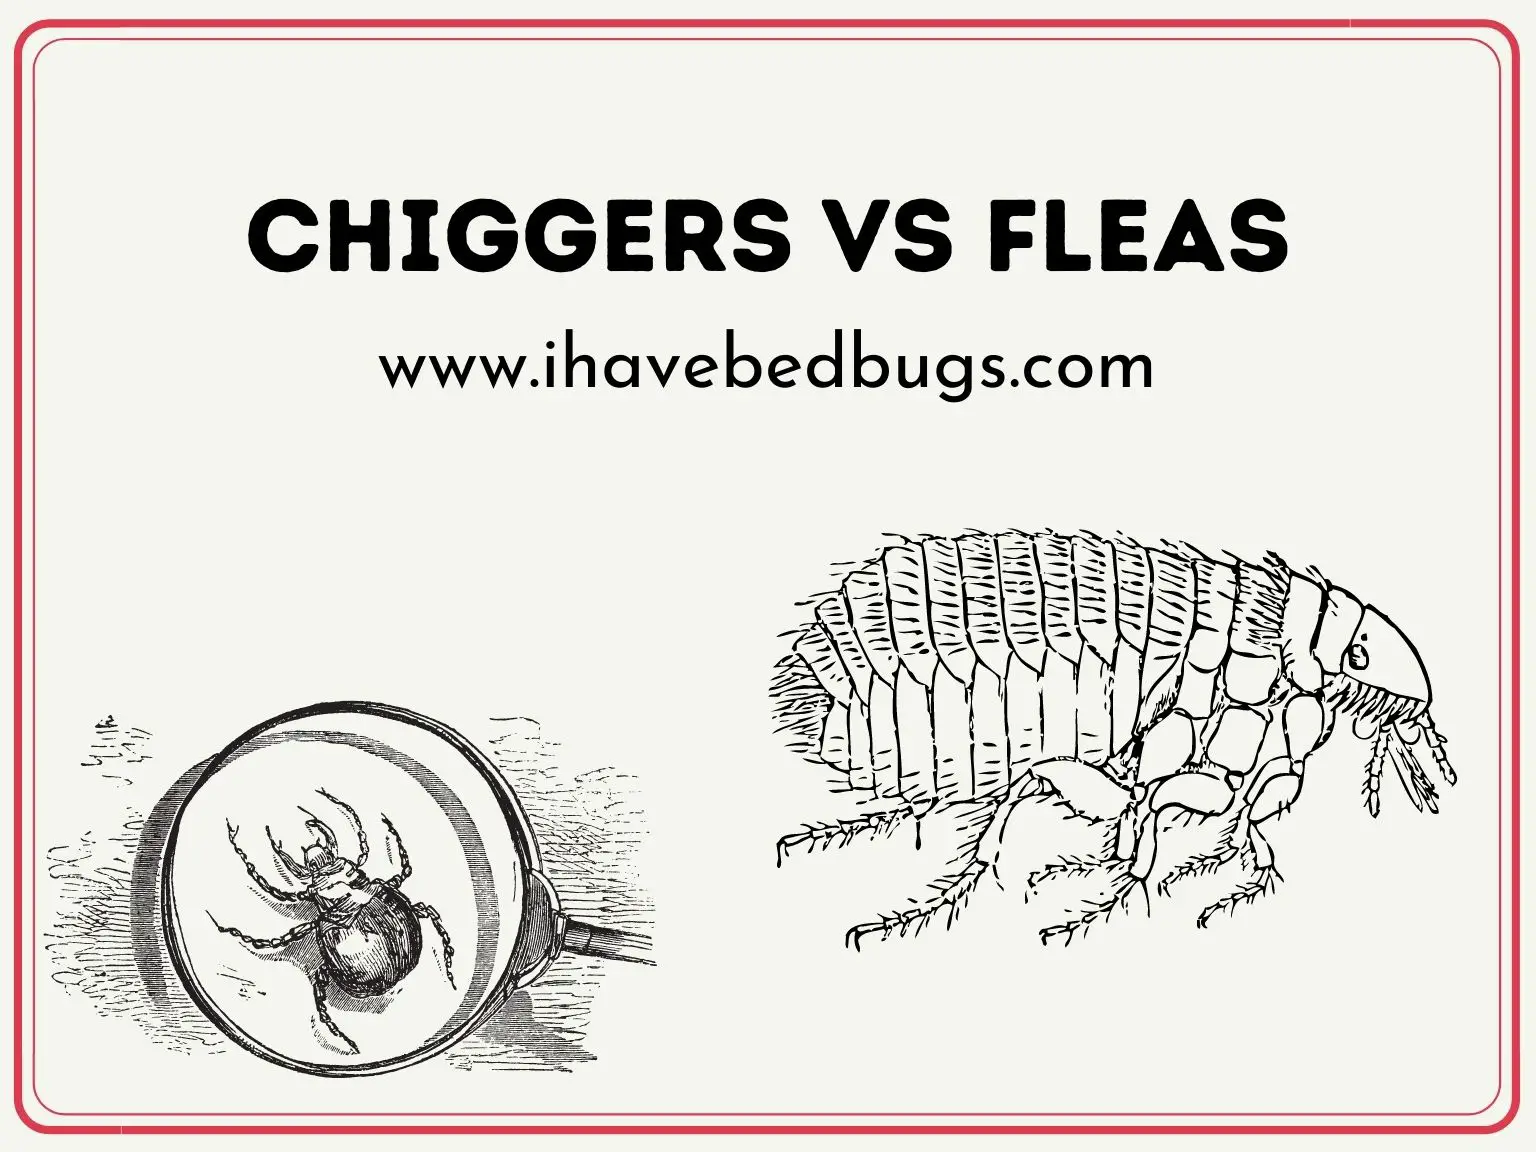 chiggers-vs-fleas